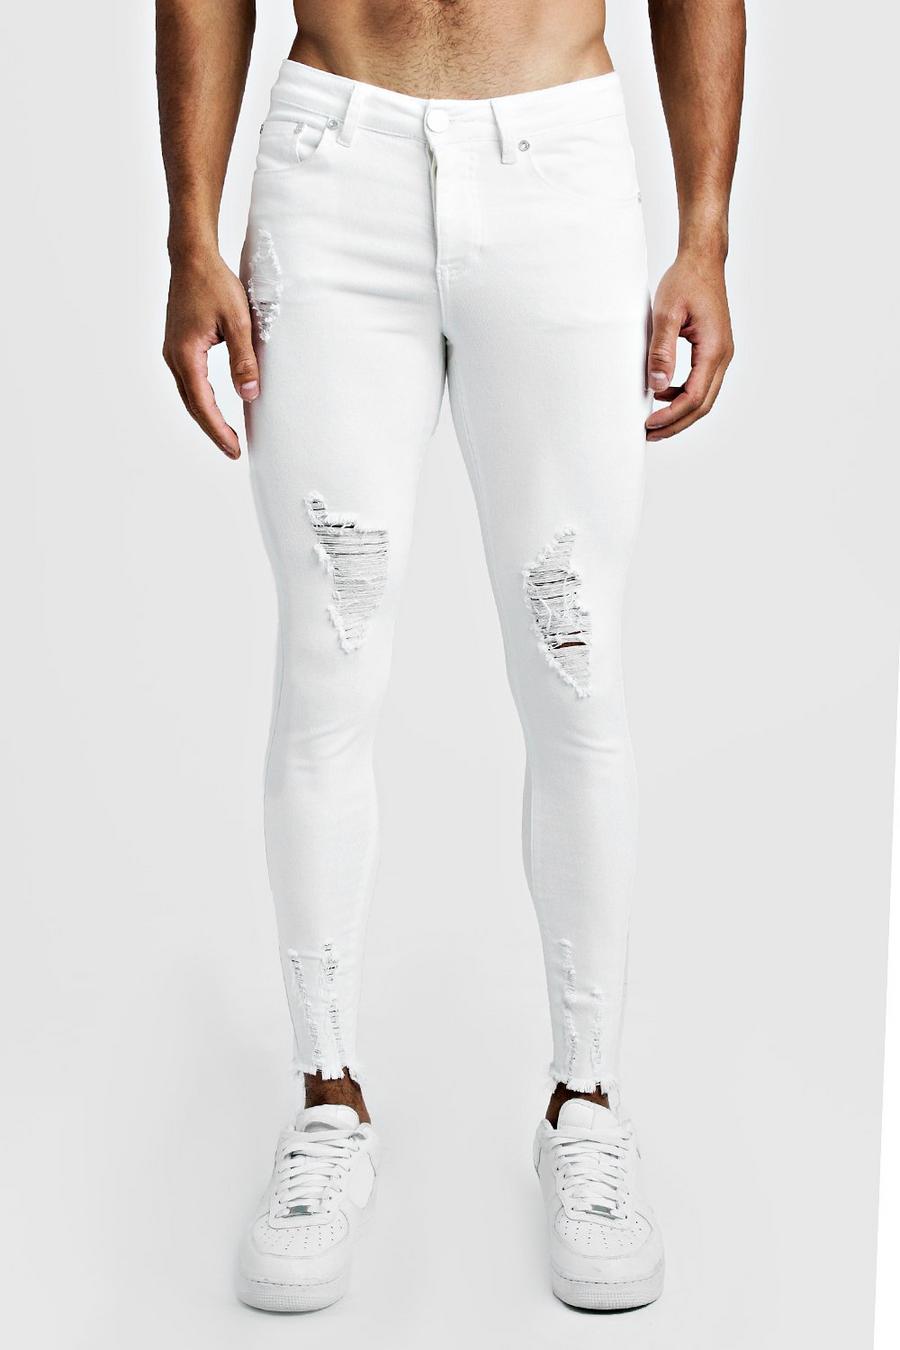 volatilidad Ejecutante sextante Men's White Super Skinny Jeans With Raw Hem | boohoo